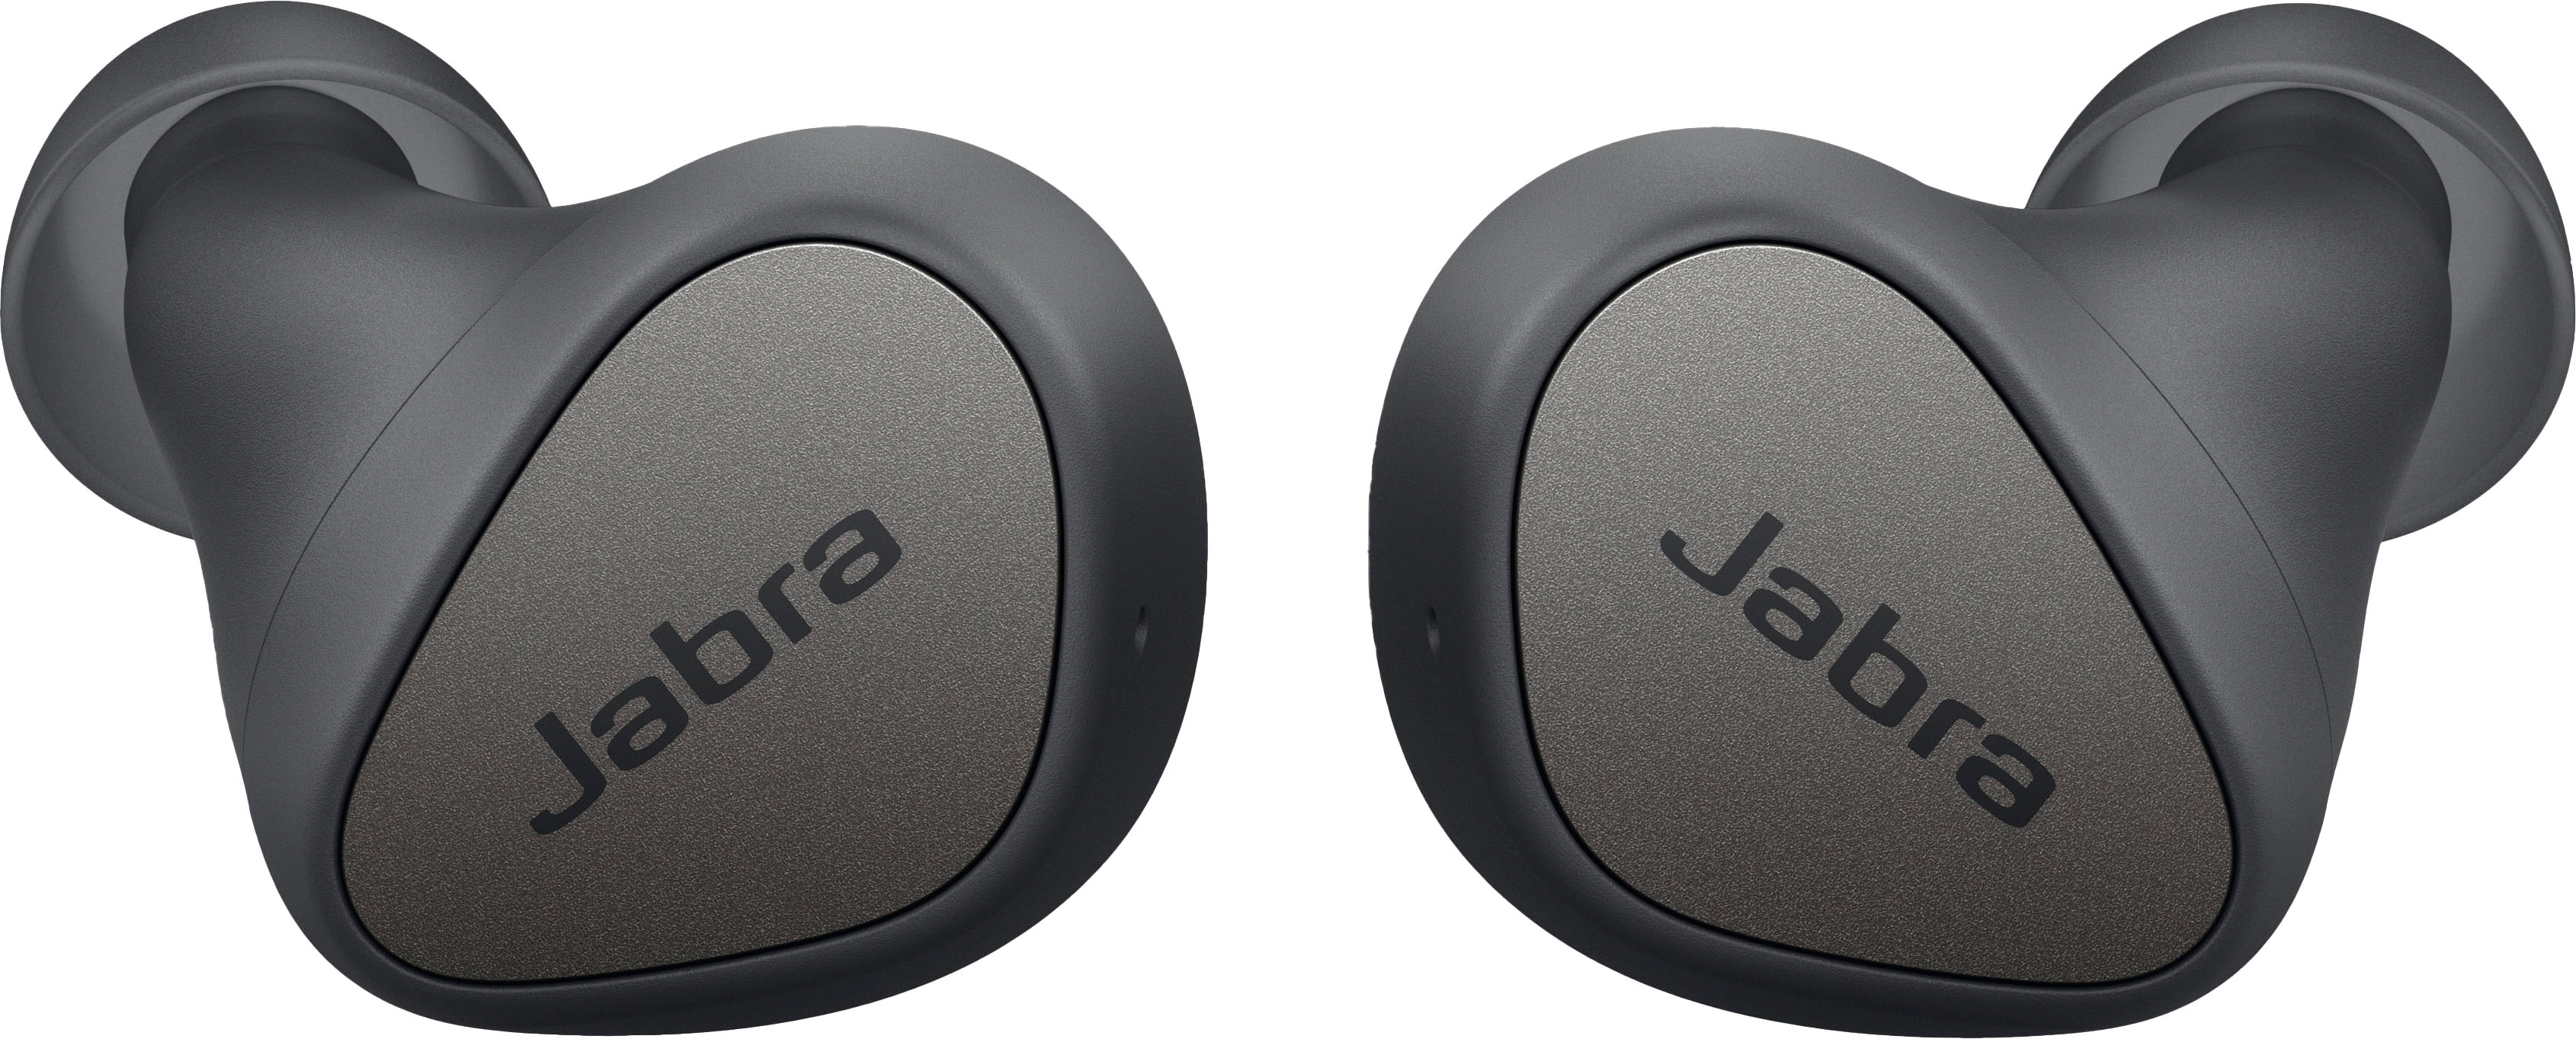 Jabra Elite 3 Earbuds Review: Stellar value - Reviewed